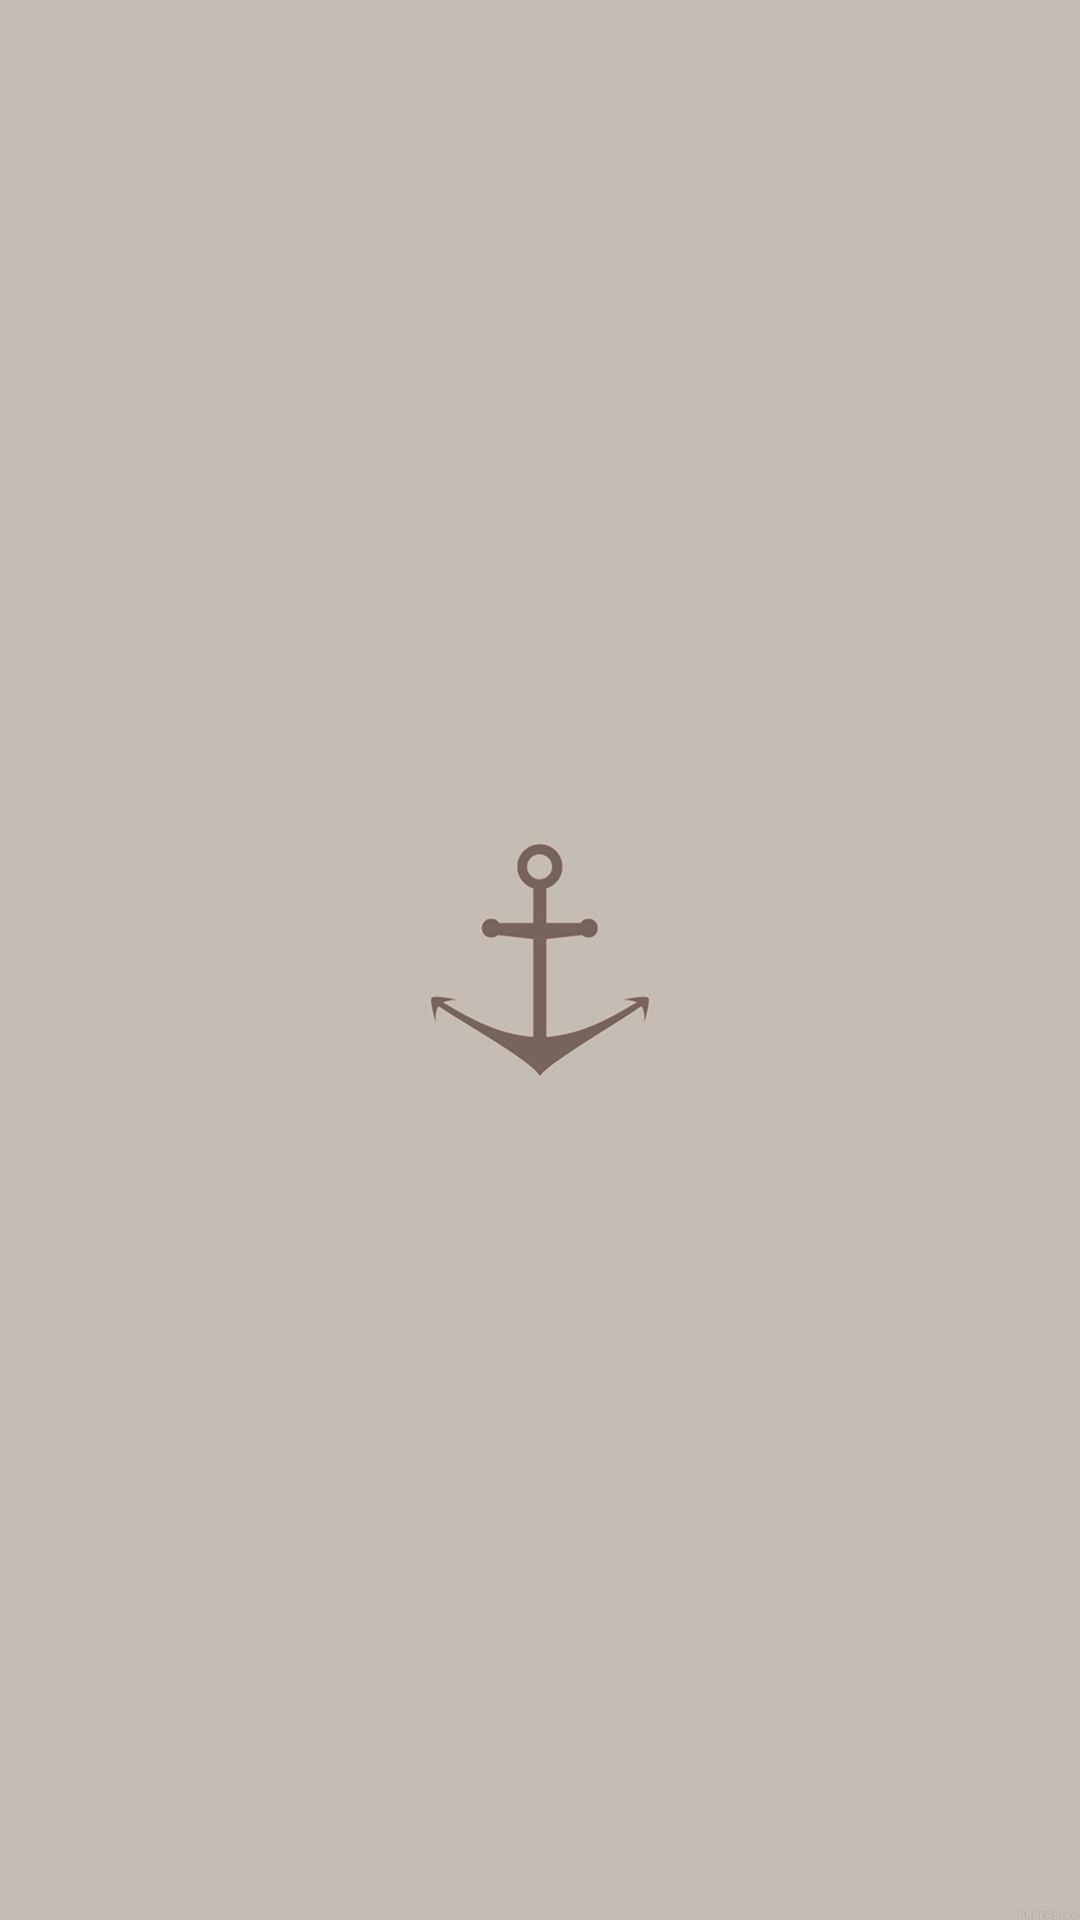 Minimal Sea Anchor Logo Red Art iPhone 8 Wallpaper Free Download